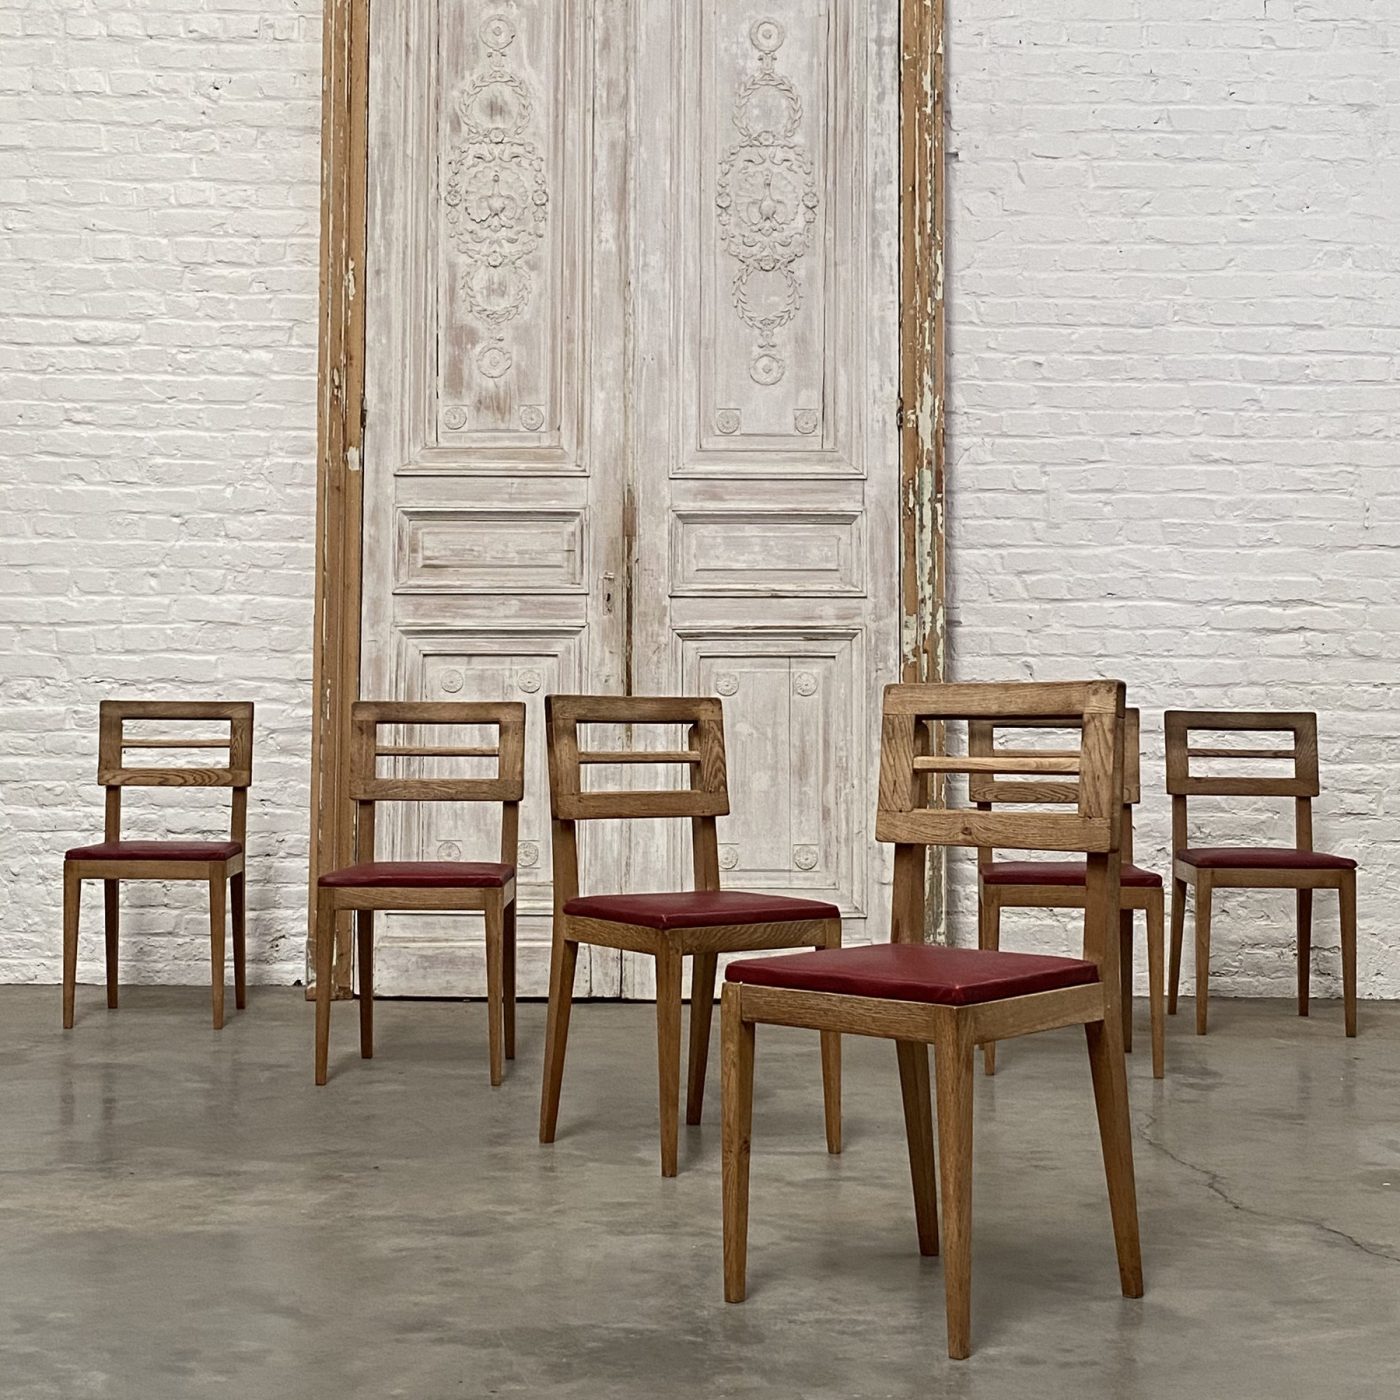 objet-vagabond-oak-chairs0000